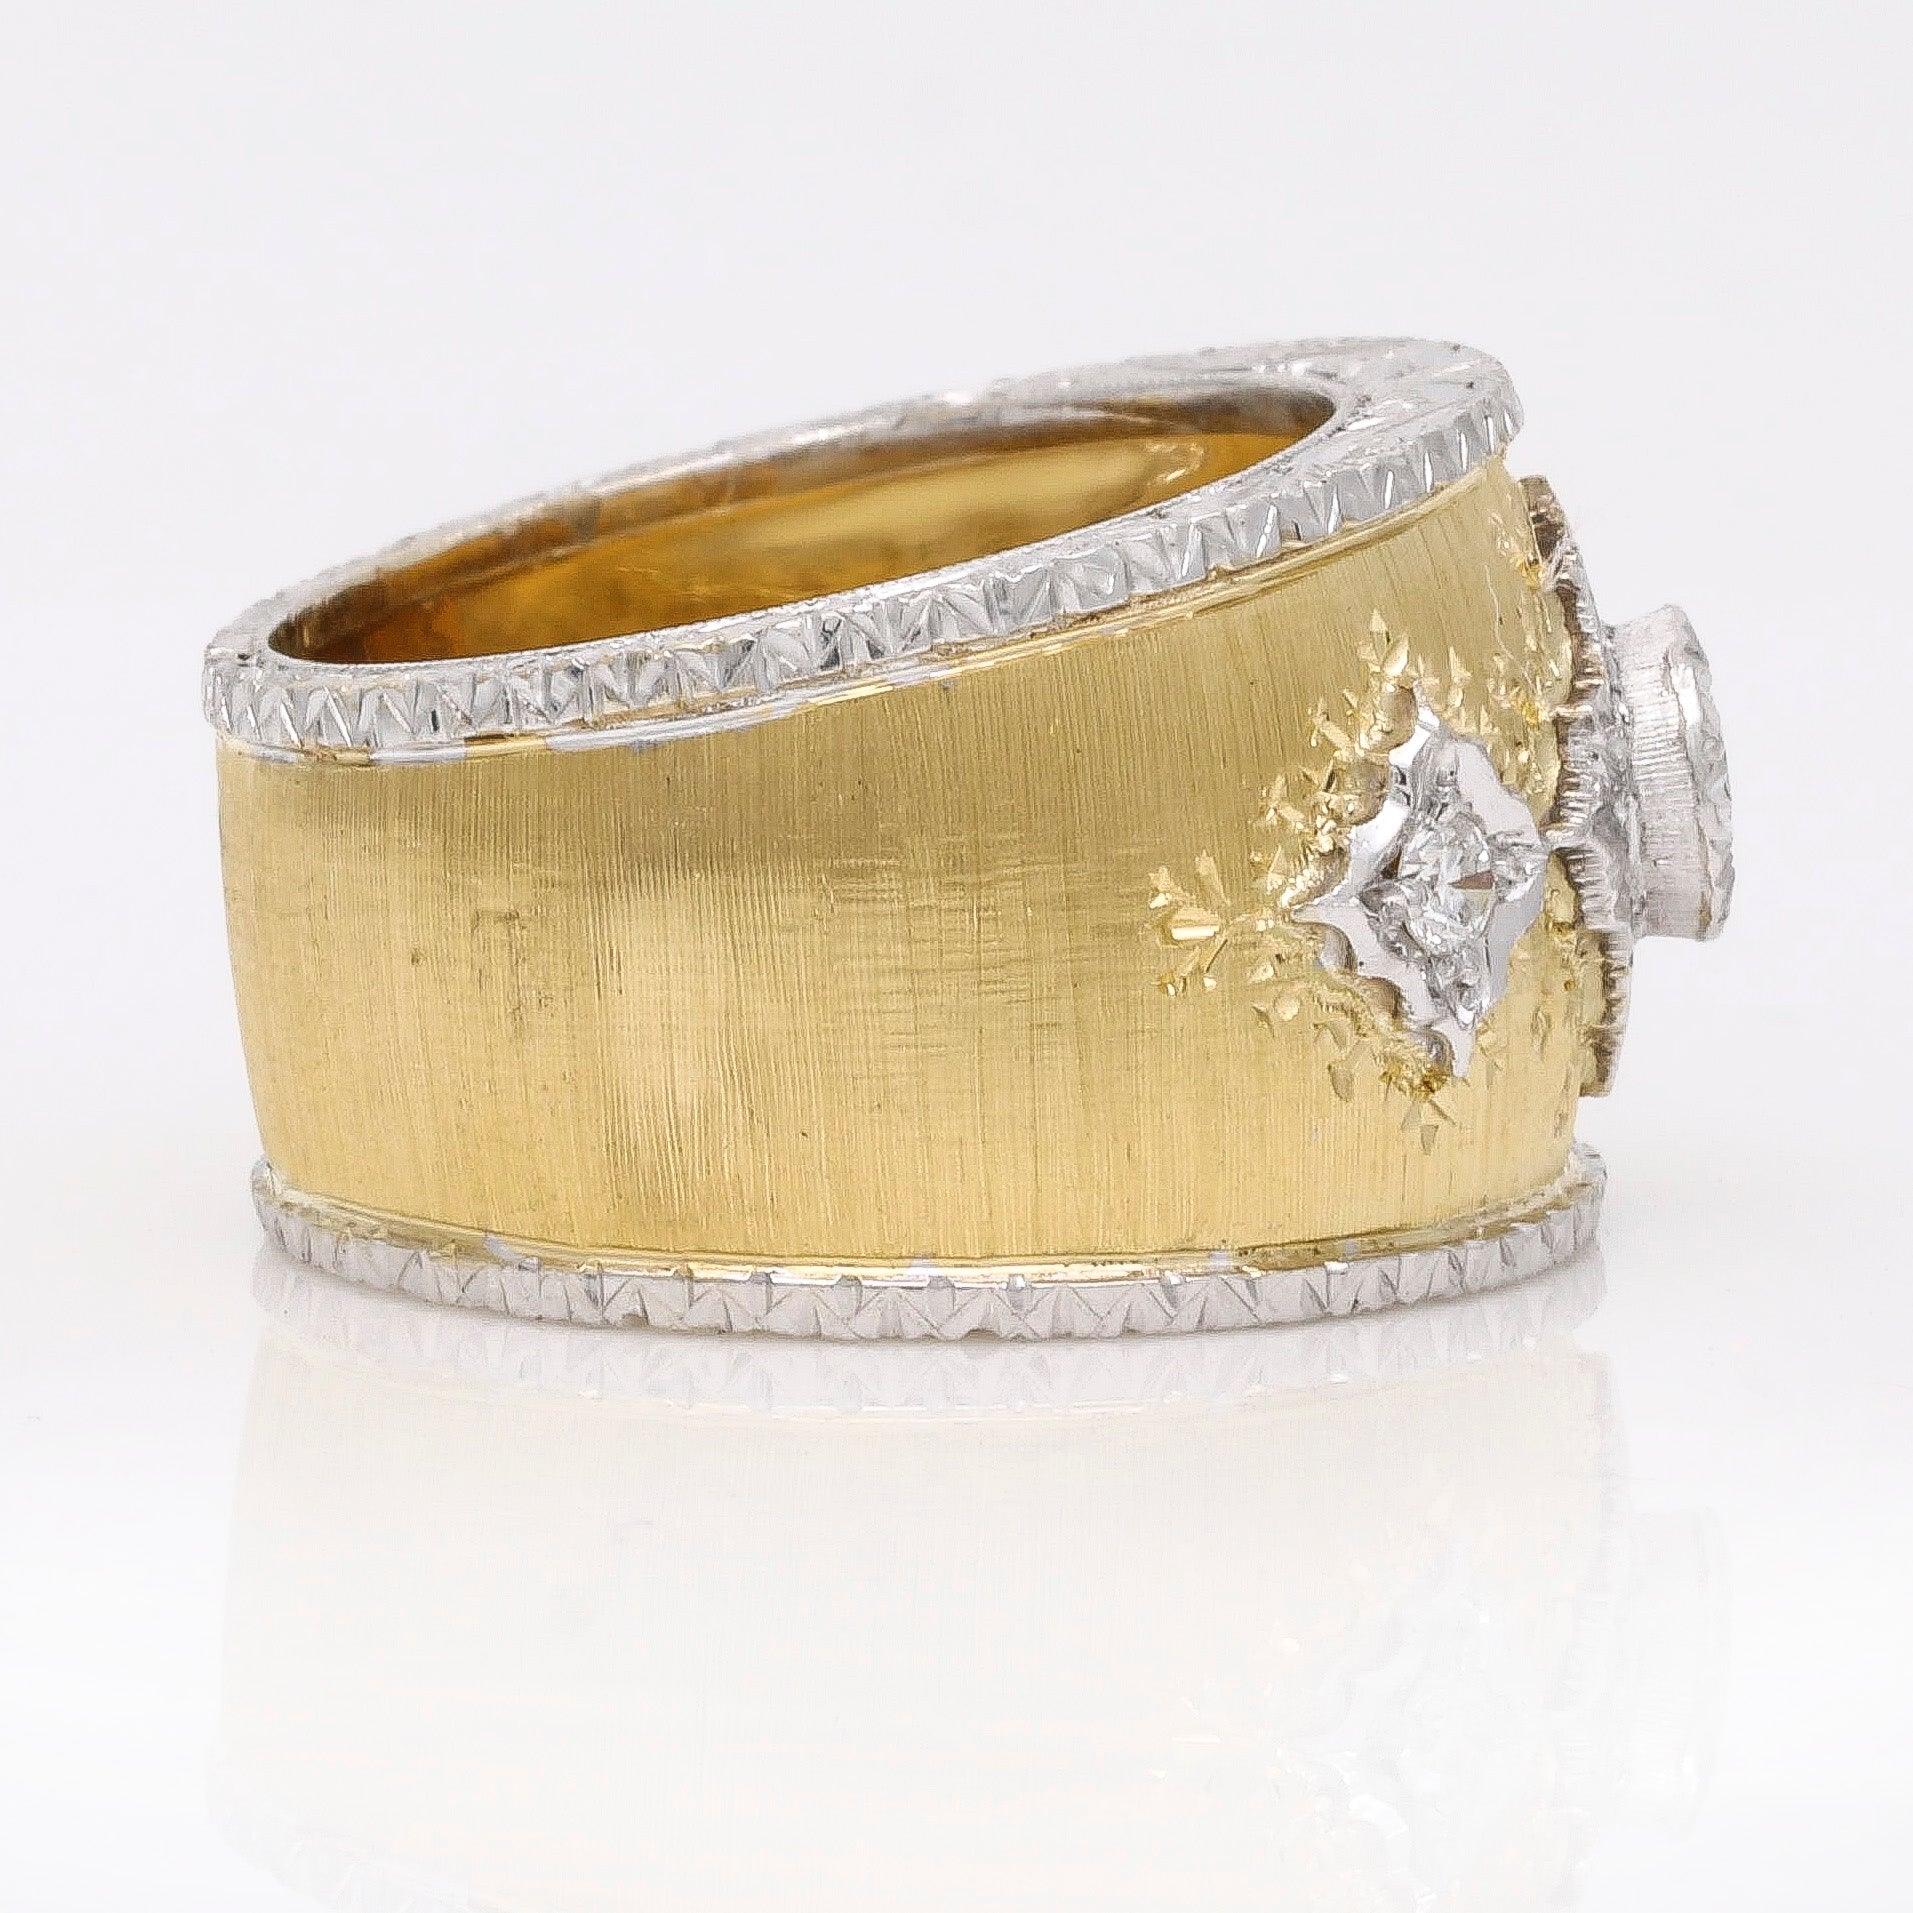 0.5 Carat Diamond Engagement Ring, Italian Engagement Ring With GIA  Certified Half Carat Diamond, Made in Italy Diamond Ring - Etsy